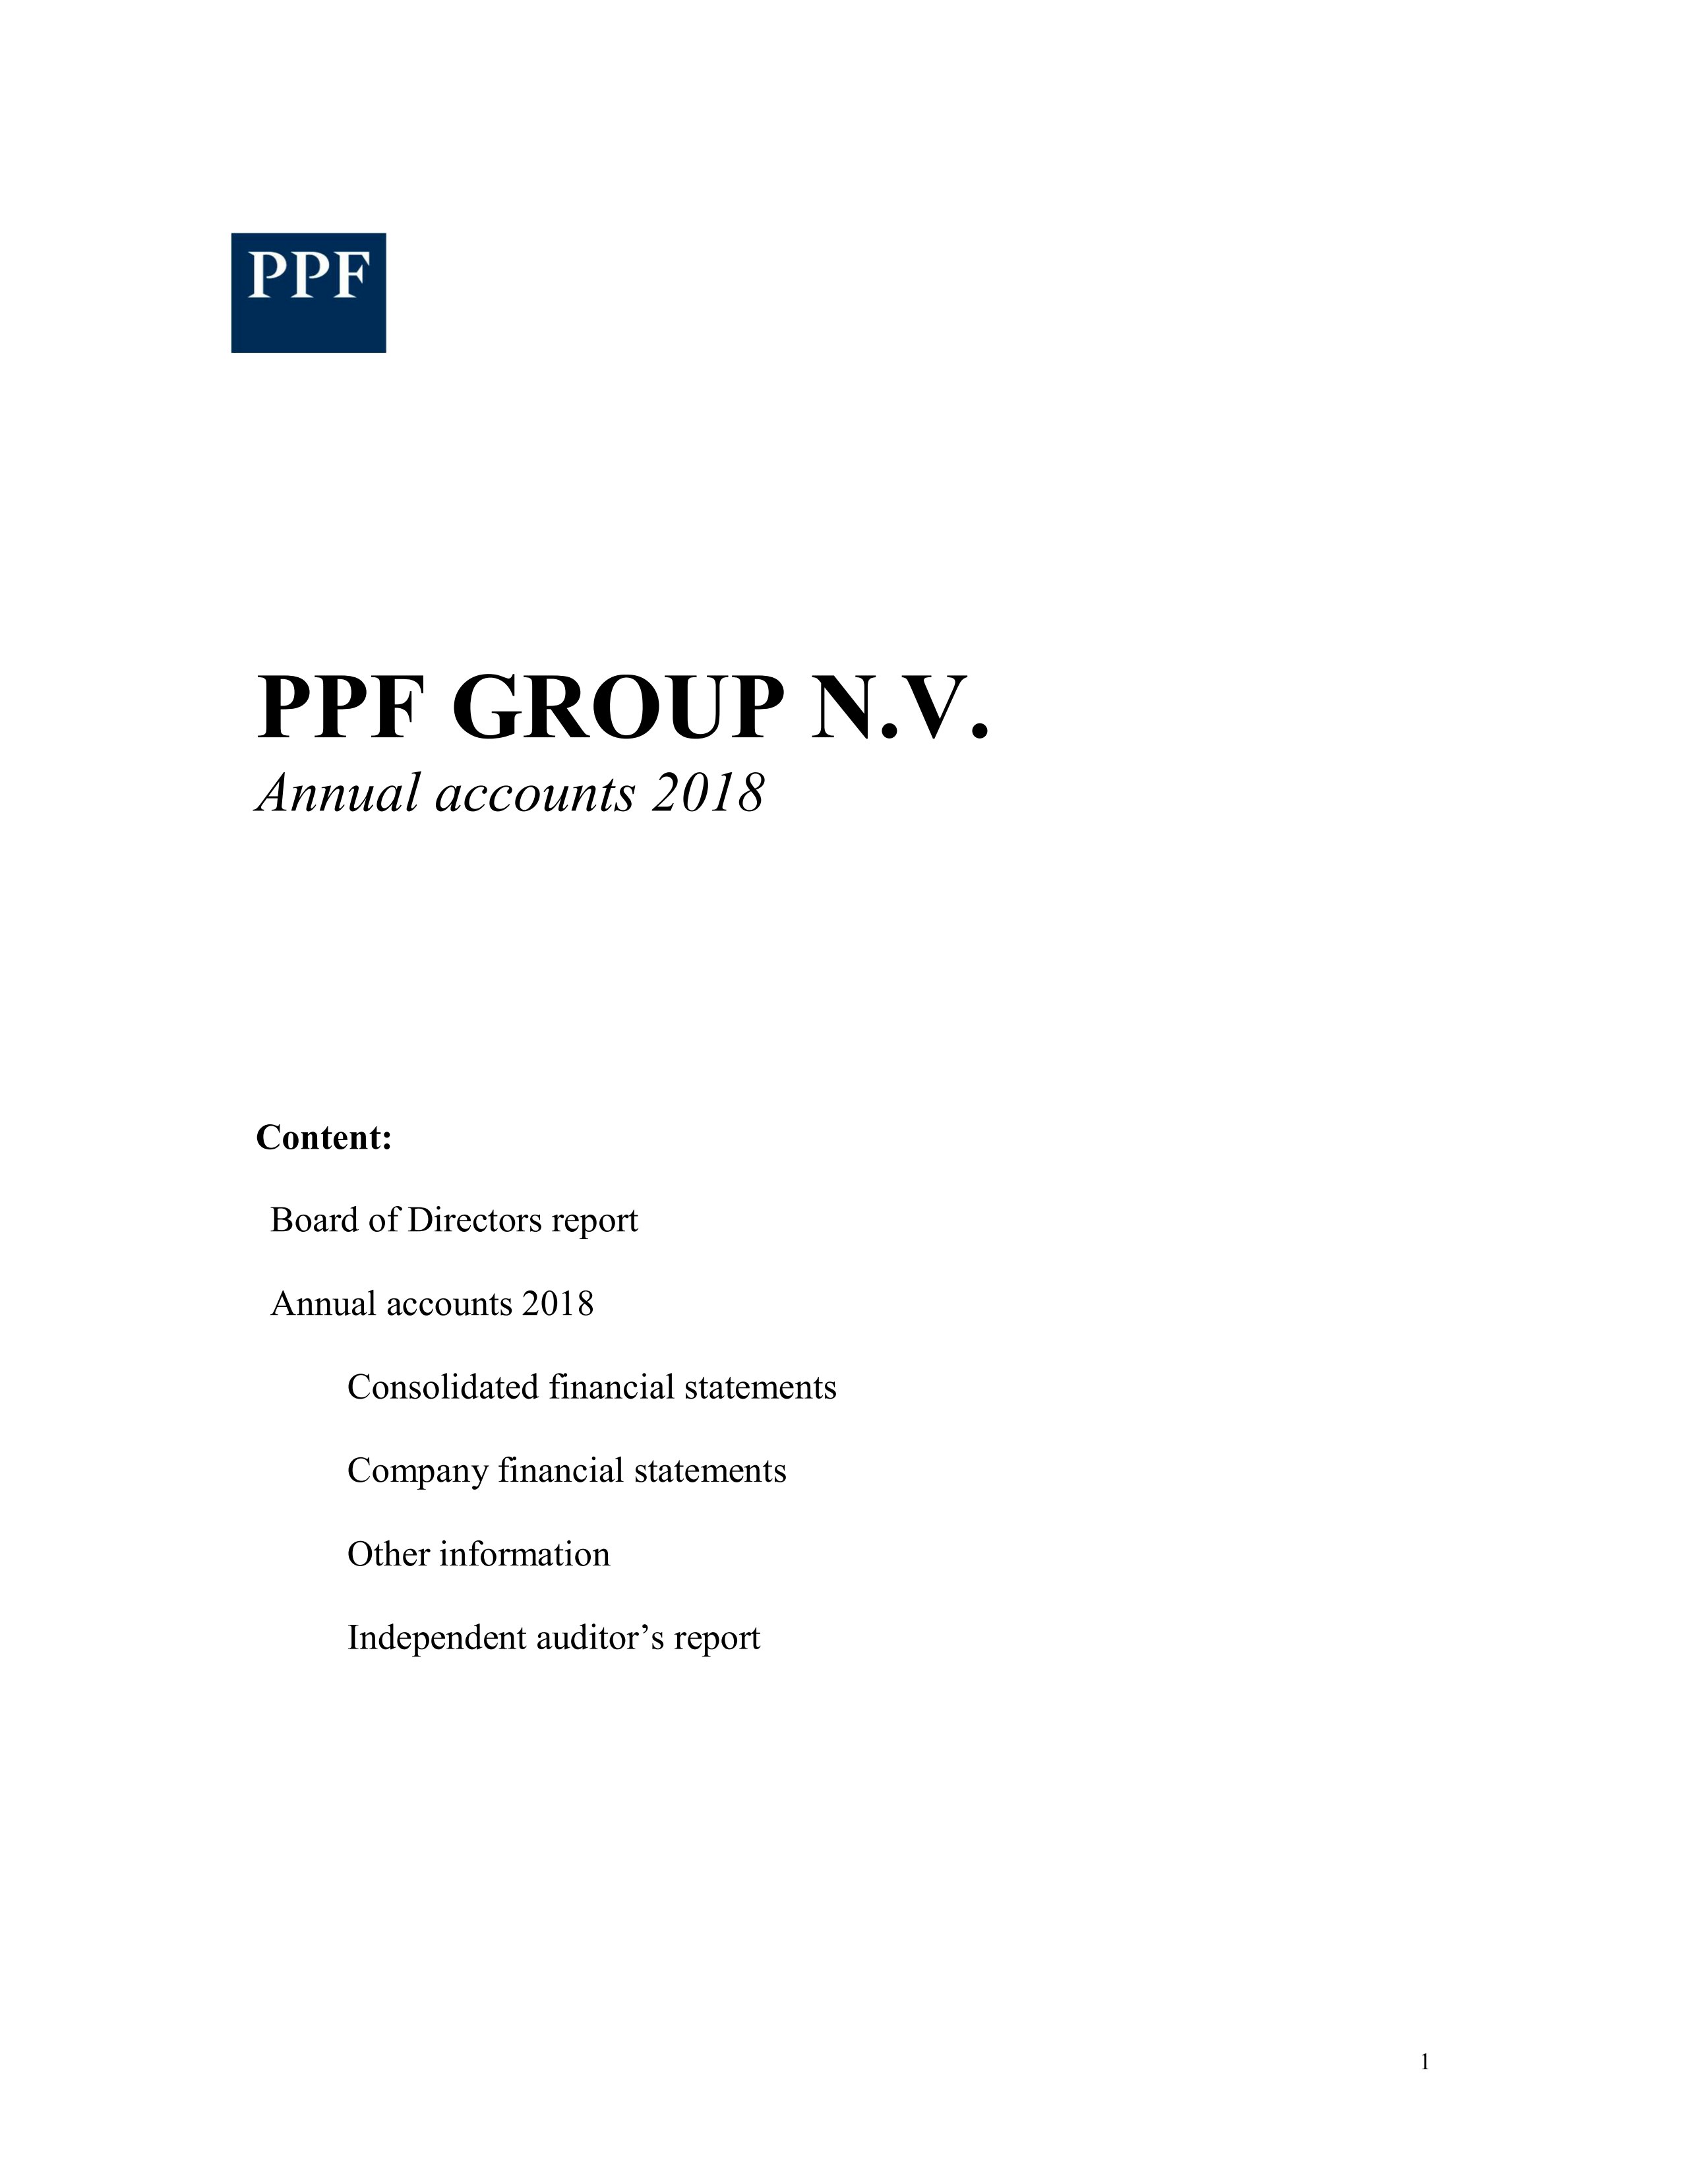 PPF Group N.V. Annual Accounts 2018 (23/5/2018)